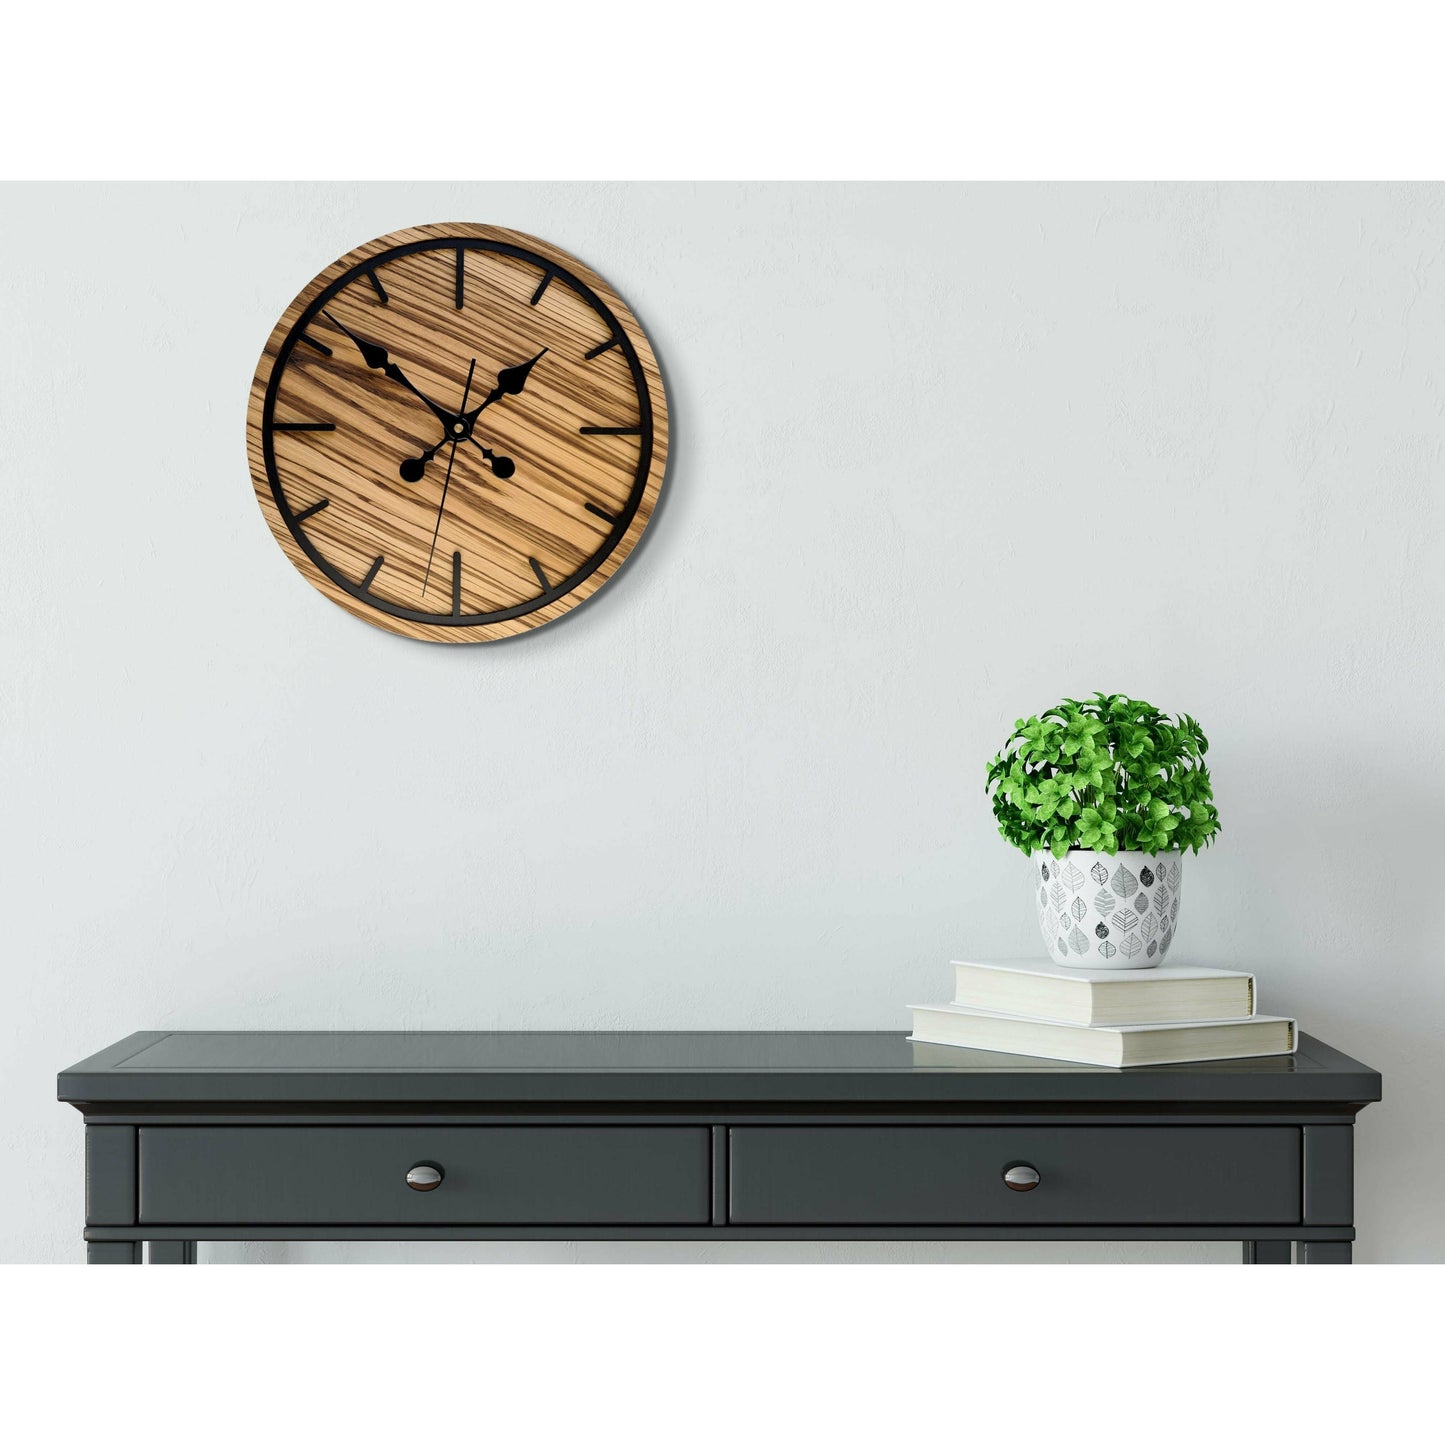 ClockDesignCo Unusual Wooden Wall Clock | Zebrano Wood | Rustic Wall Clock | Square Clock Design